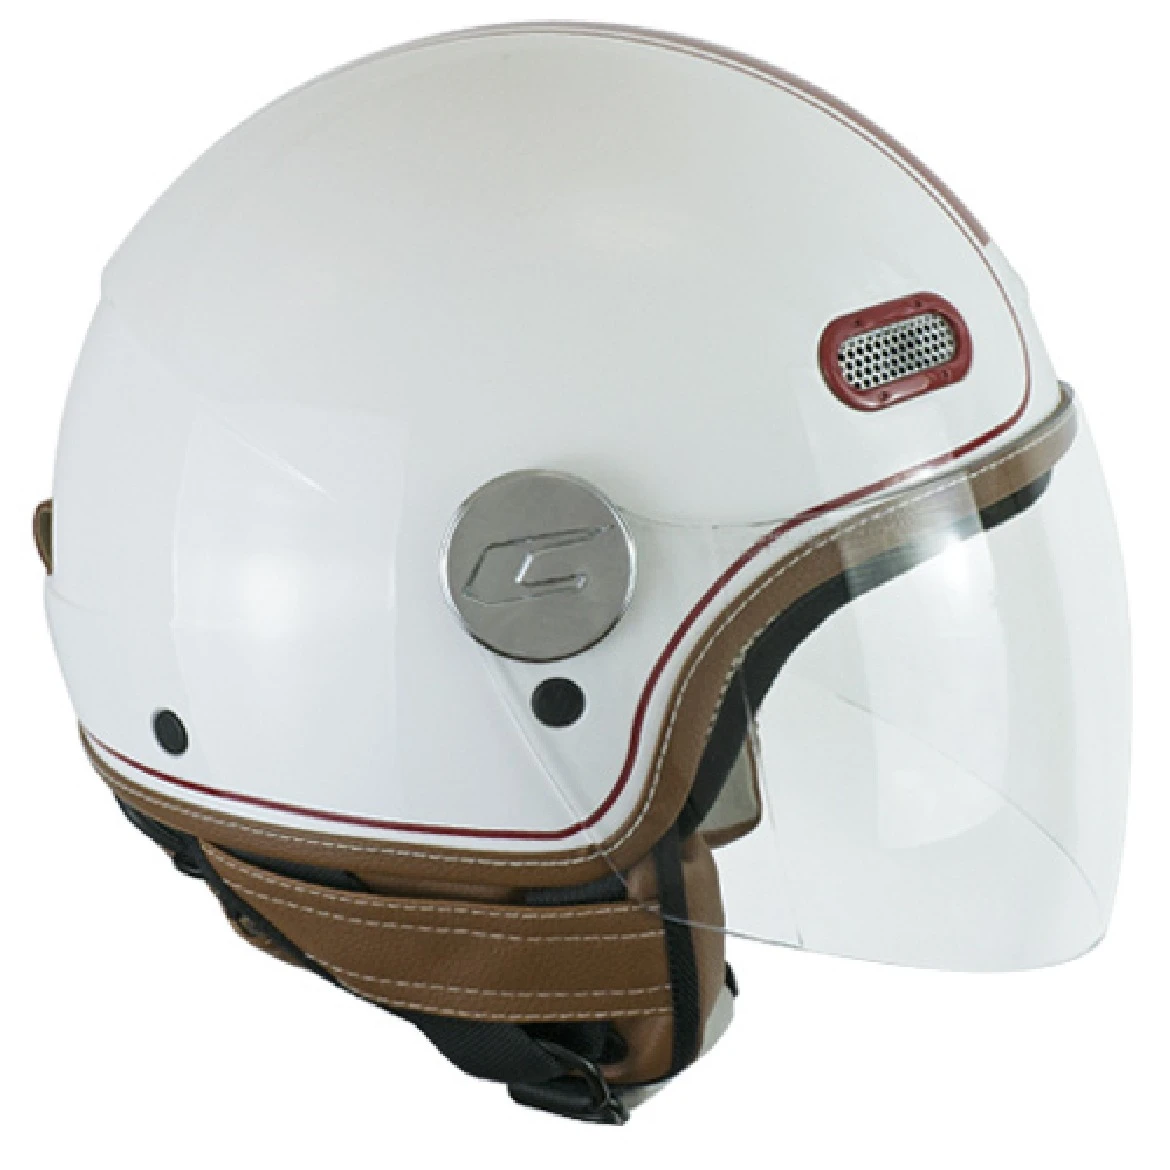 CGM Jet casco de motocicleta con visor largo, 109V, globo, VINTAGE, blanco,  Burdeos|Cascos| - AliExpress